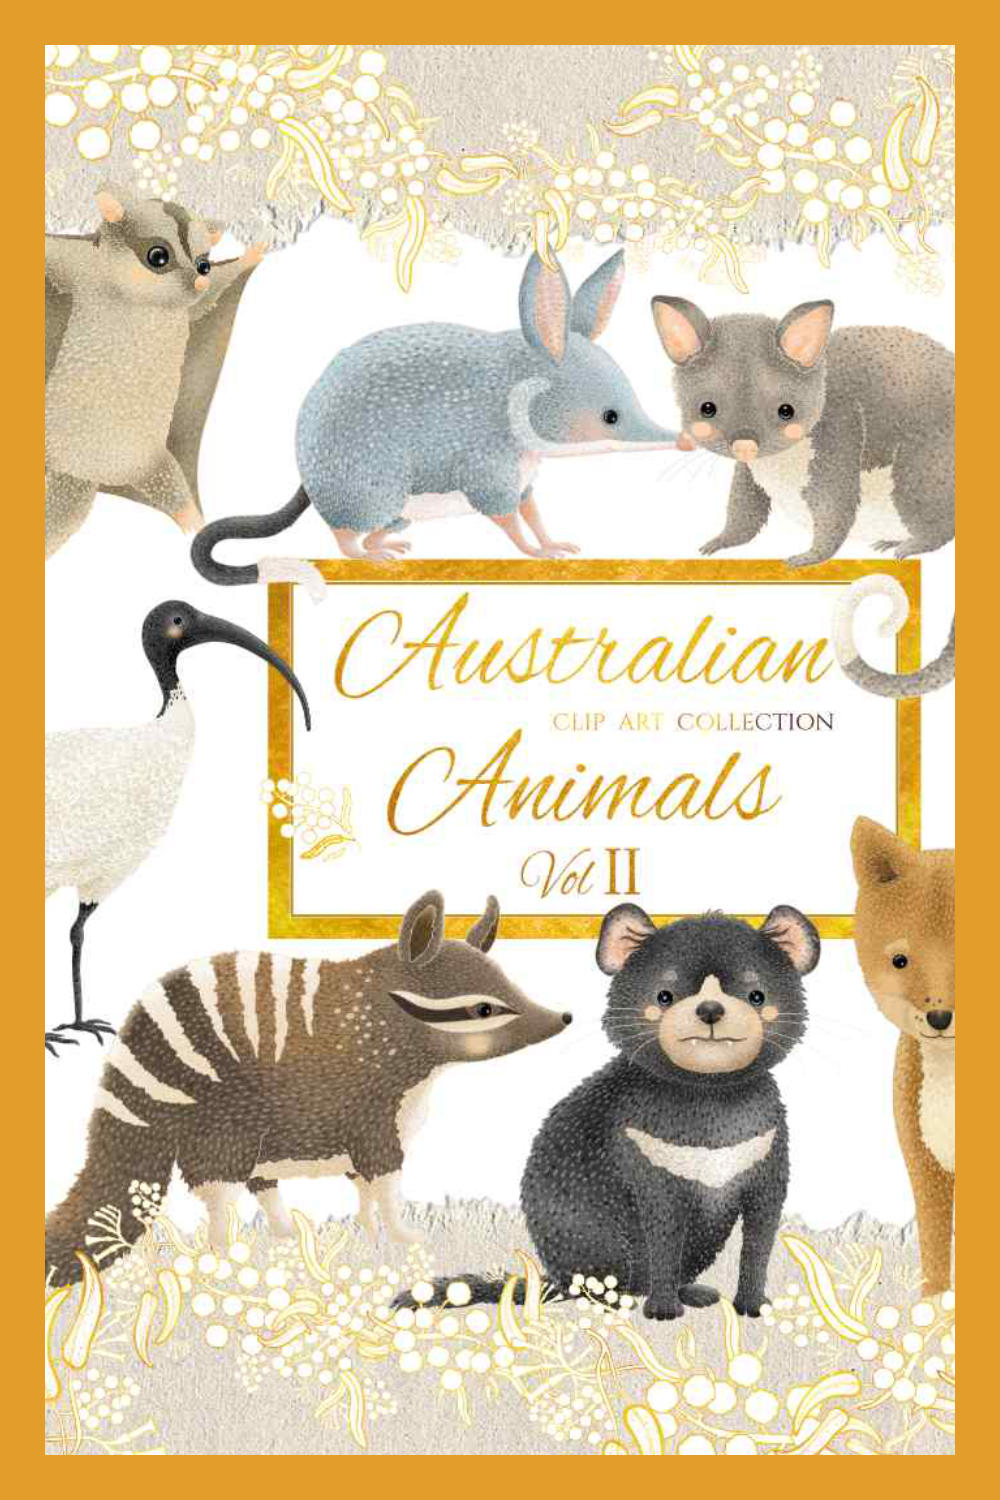 Australian Animals Vol II Clip Art Collection pinterest image.